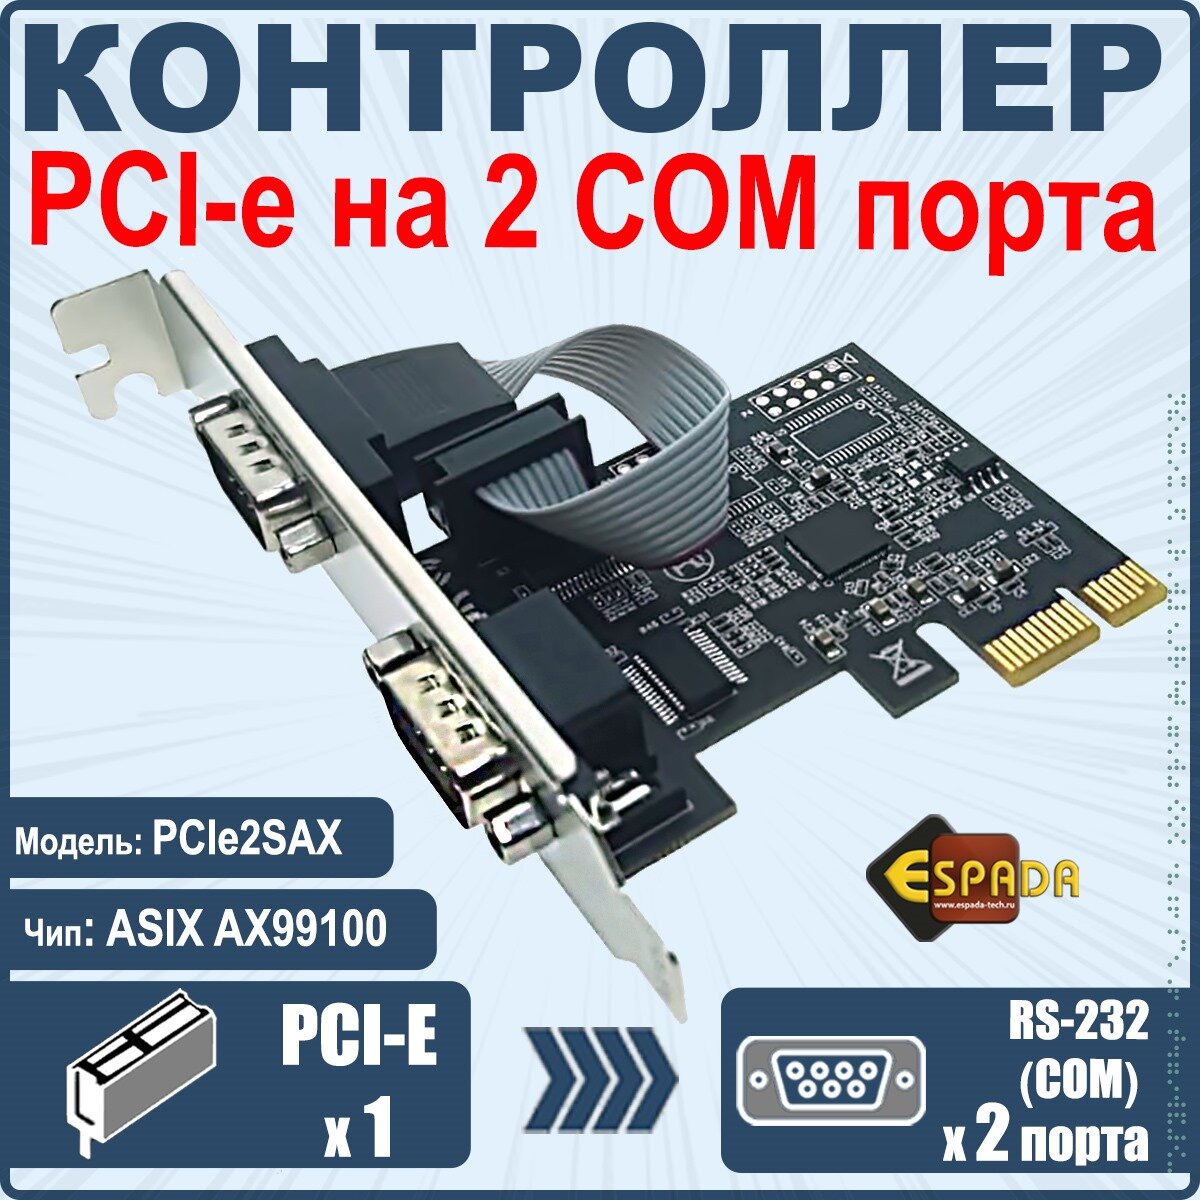 Контроллер PCI-E, 2S port, чип AX99100, модель PCIe2SAX, Espada